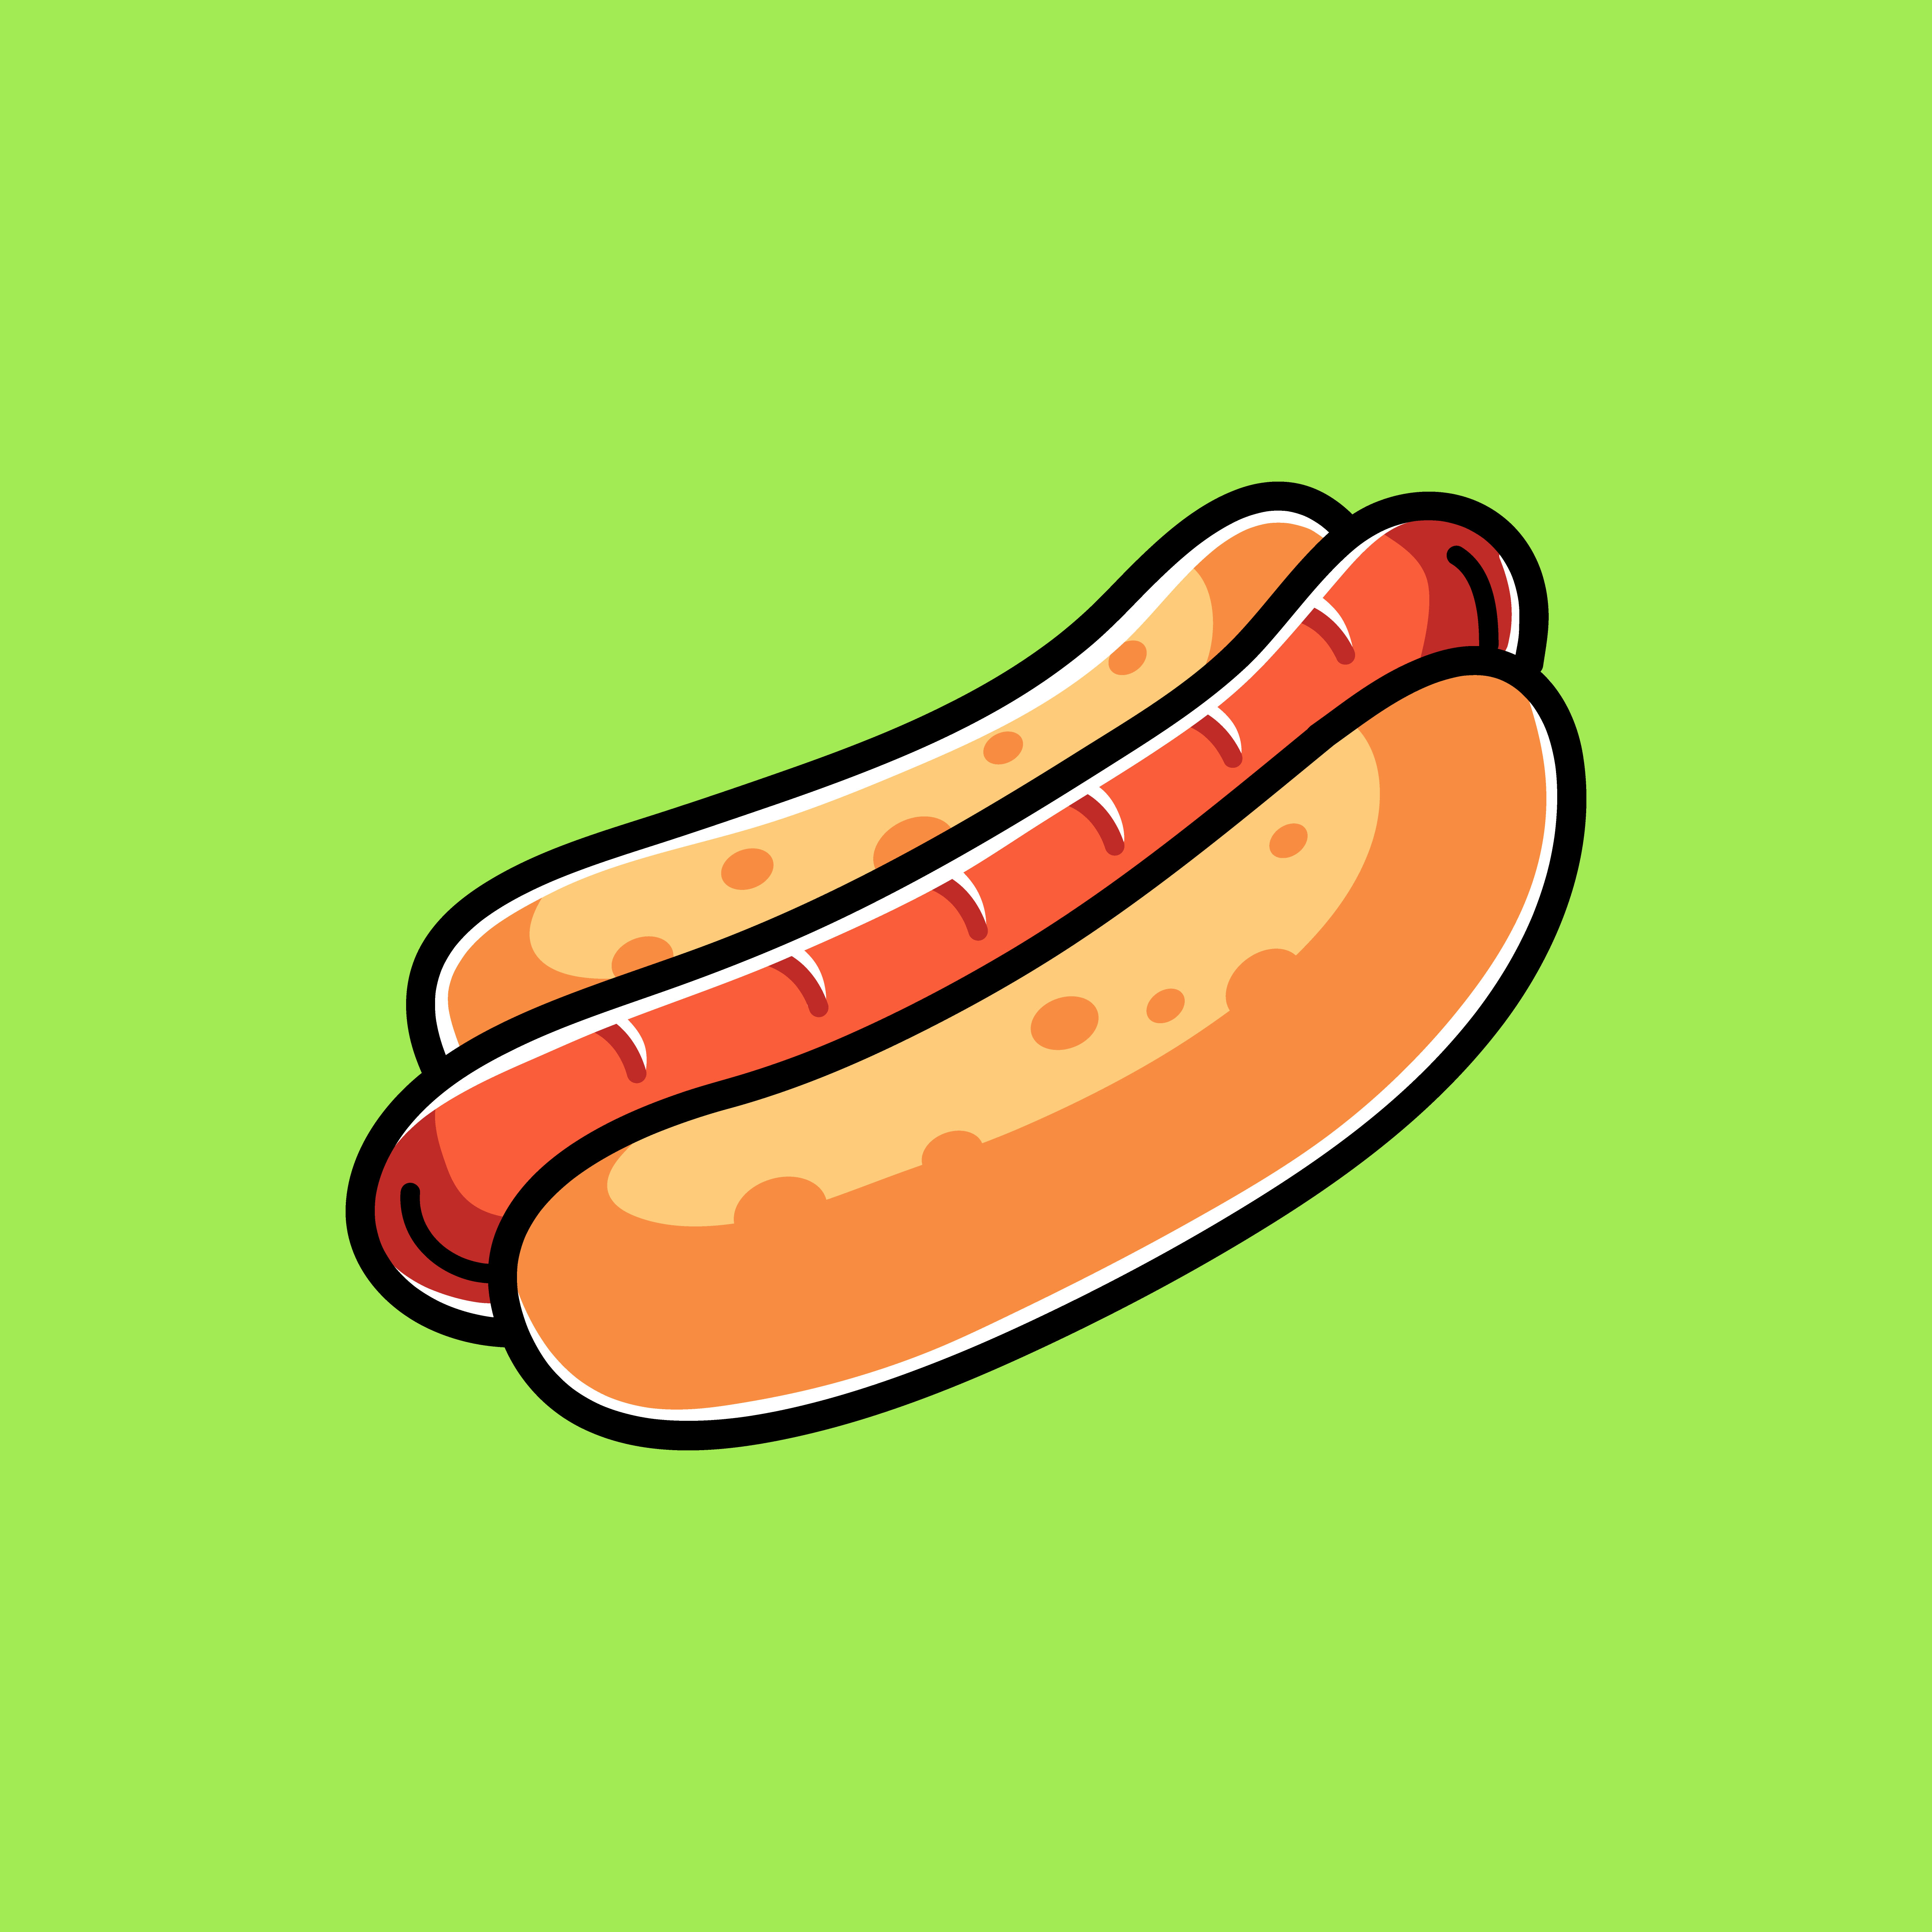 Hot Dog Doodle Cartoon Illustration by Kruweks Studio on Dribbble